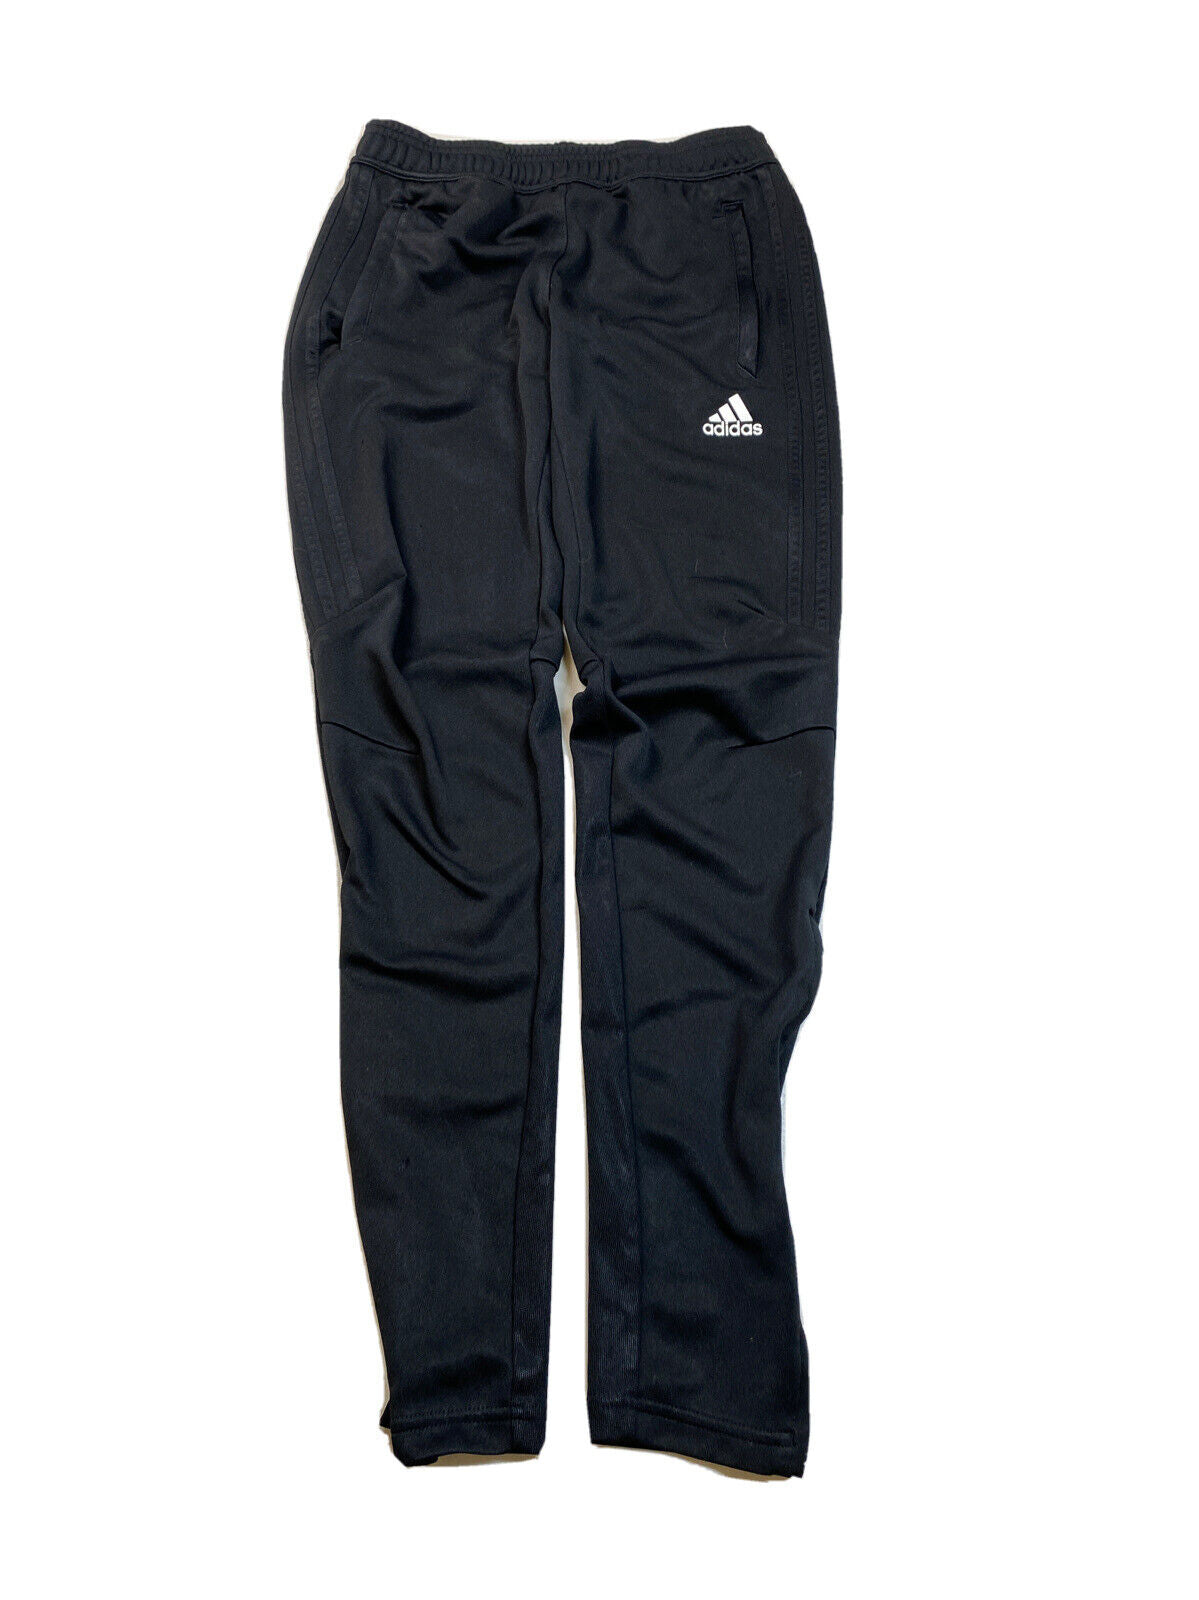 Adidas Women's Black Climacool Tiro 23 Jogger Athletic Sweatpants - XS